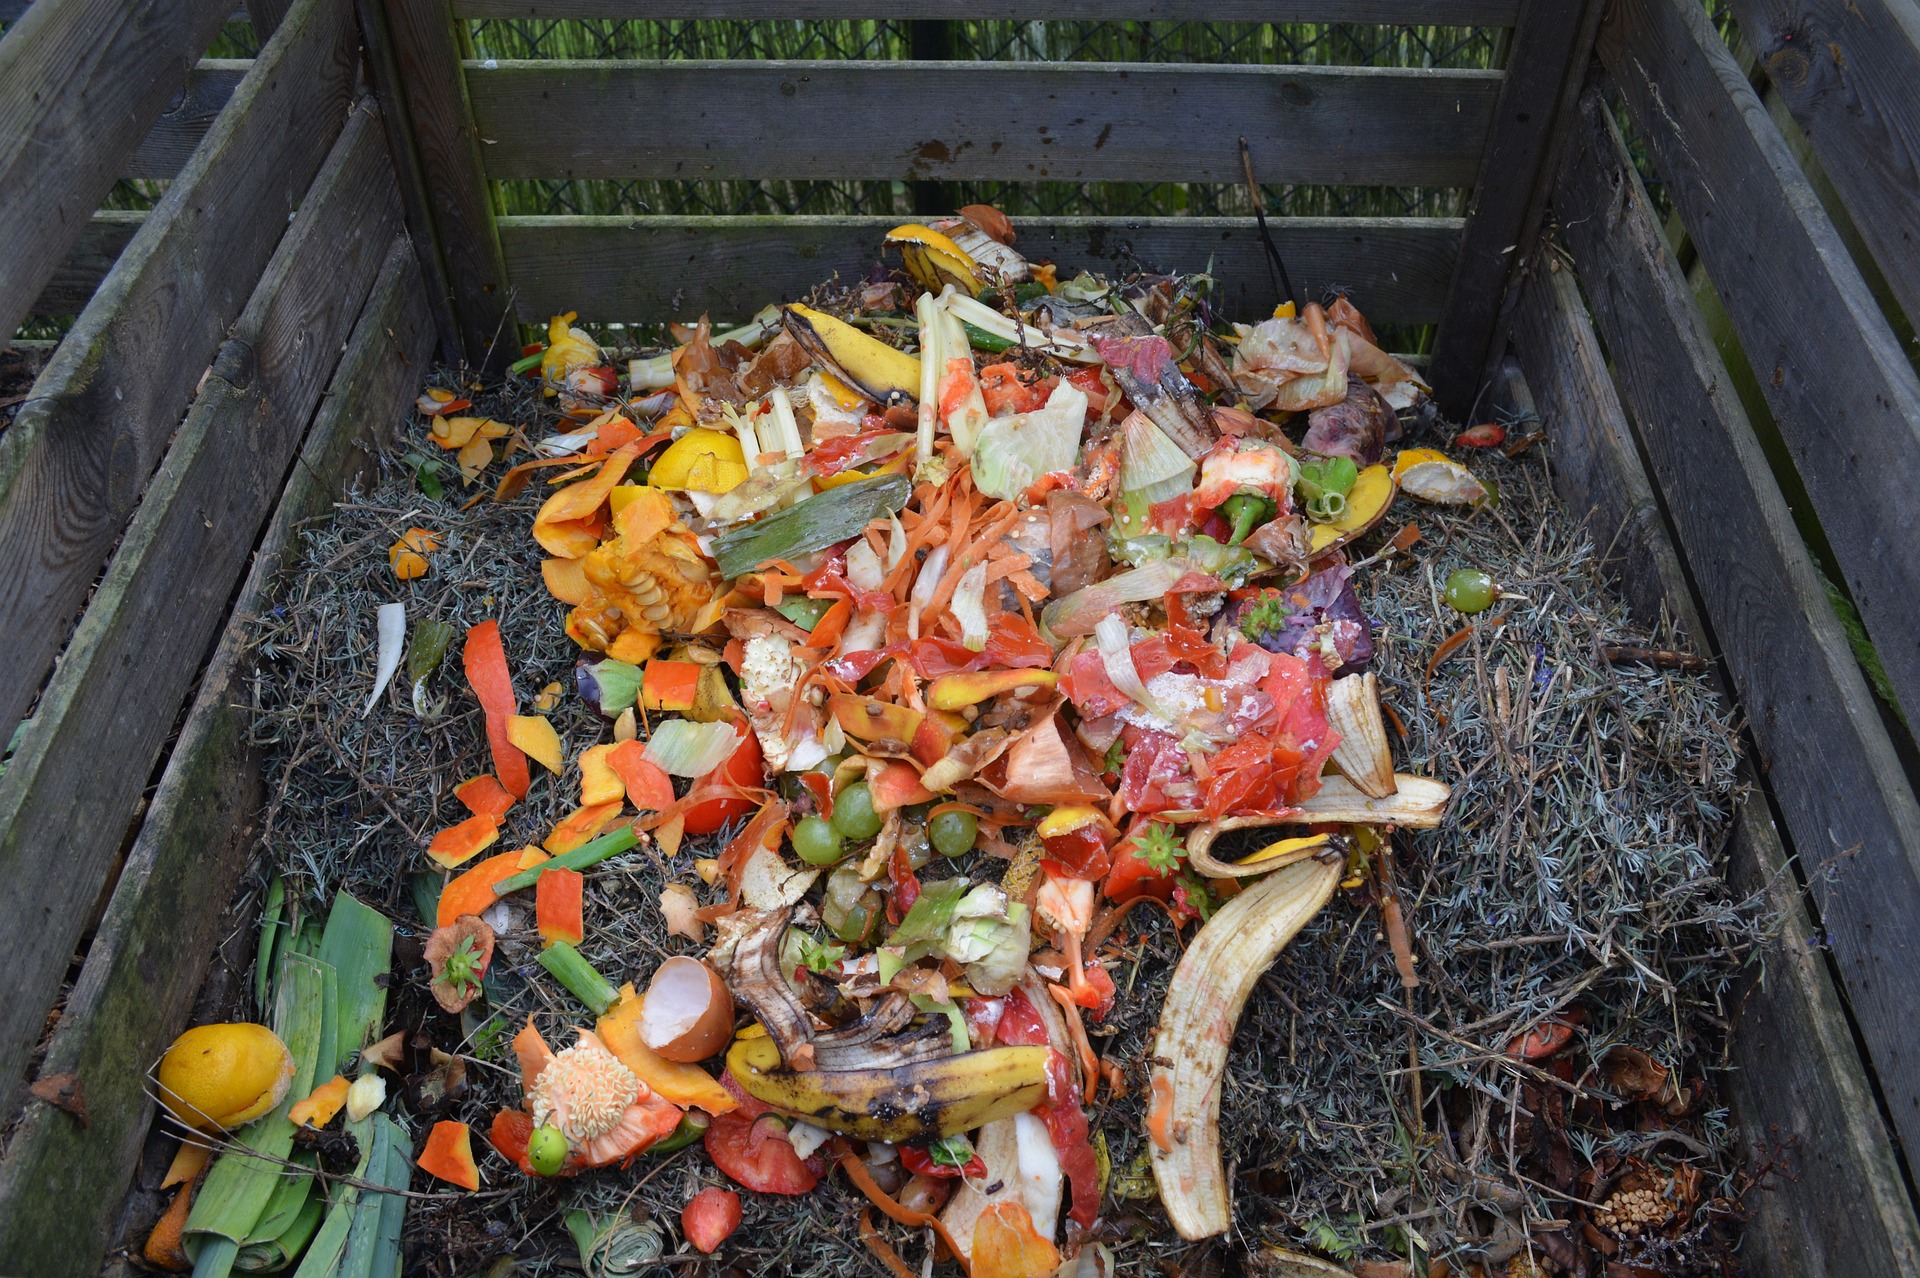 Compost bin full of vegetable and fruit scraps